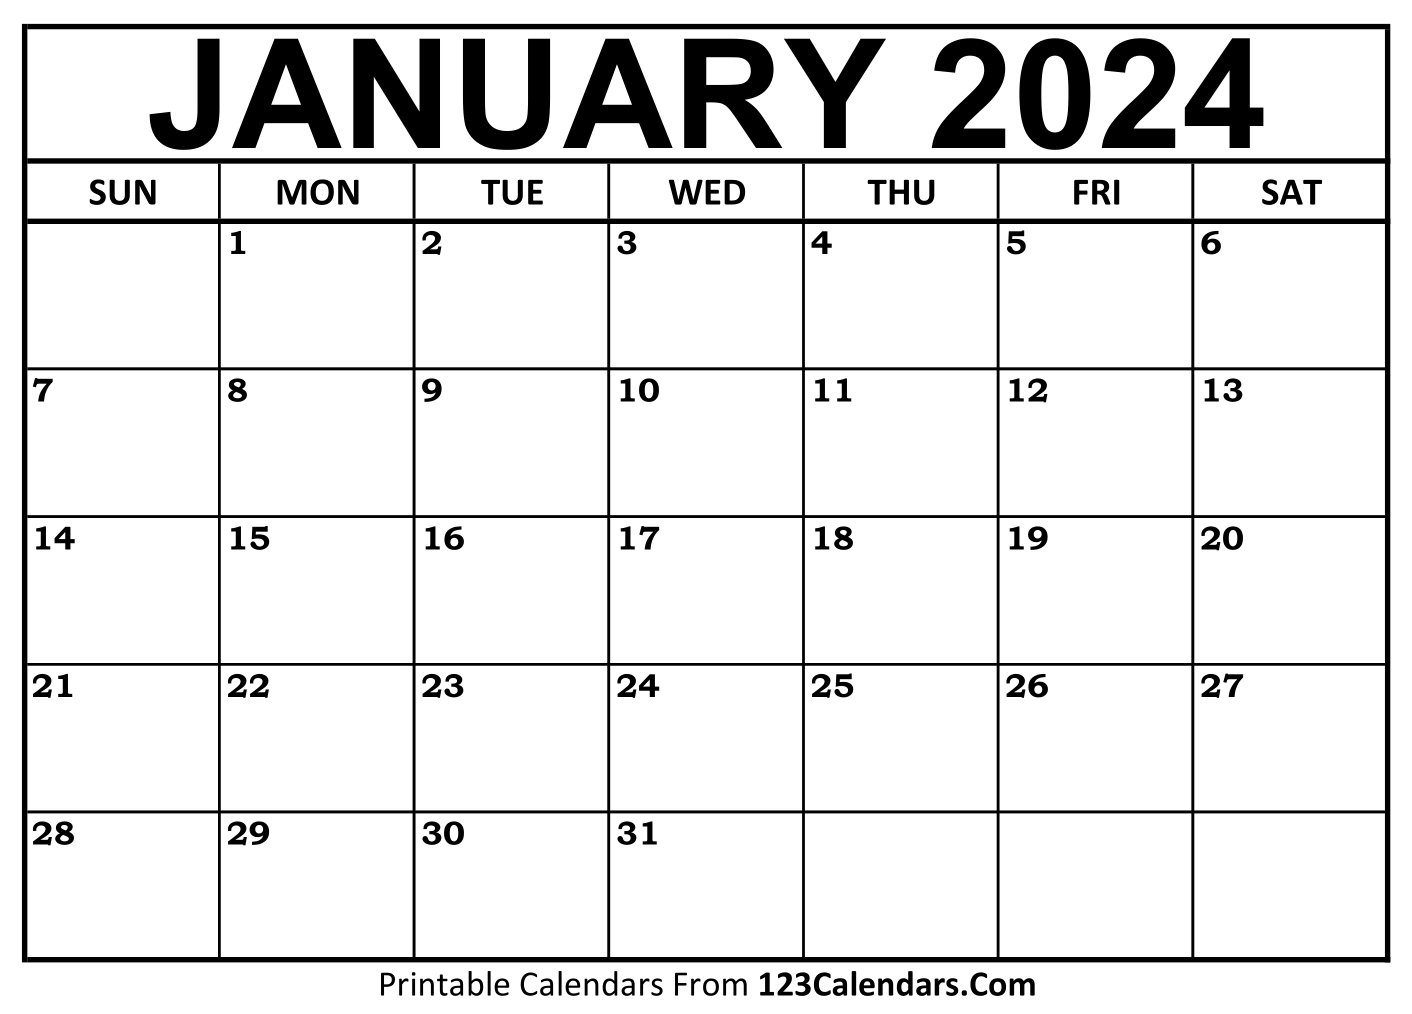 Printable January 2024 Calendar Templates - 123Calendars | January 2024 Calendar Printable Word